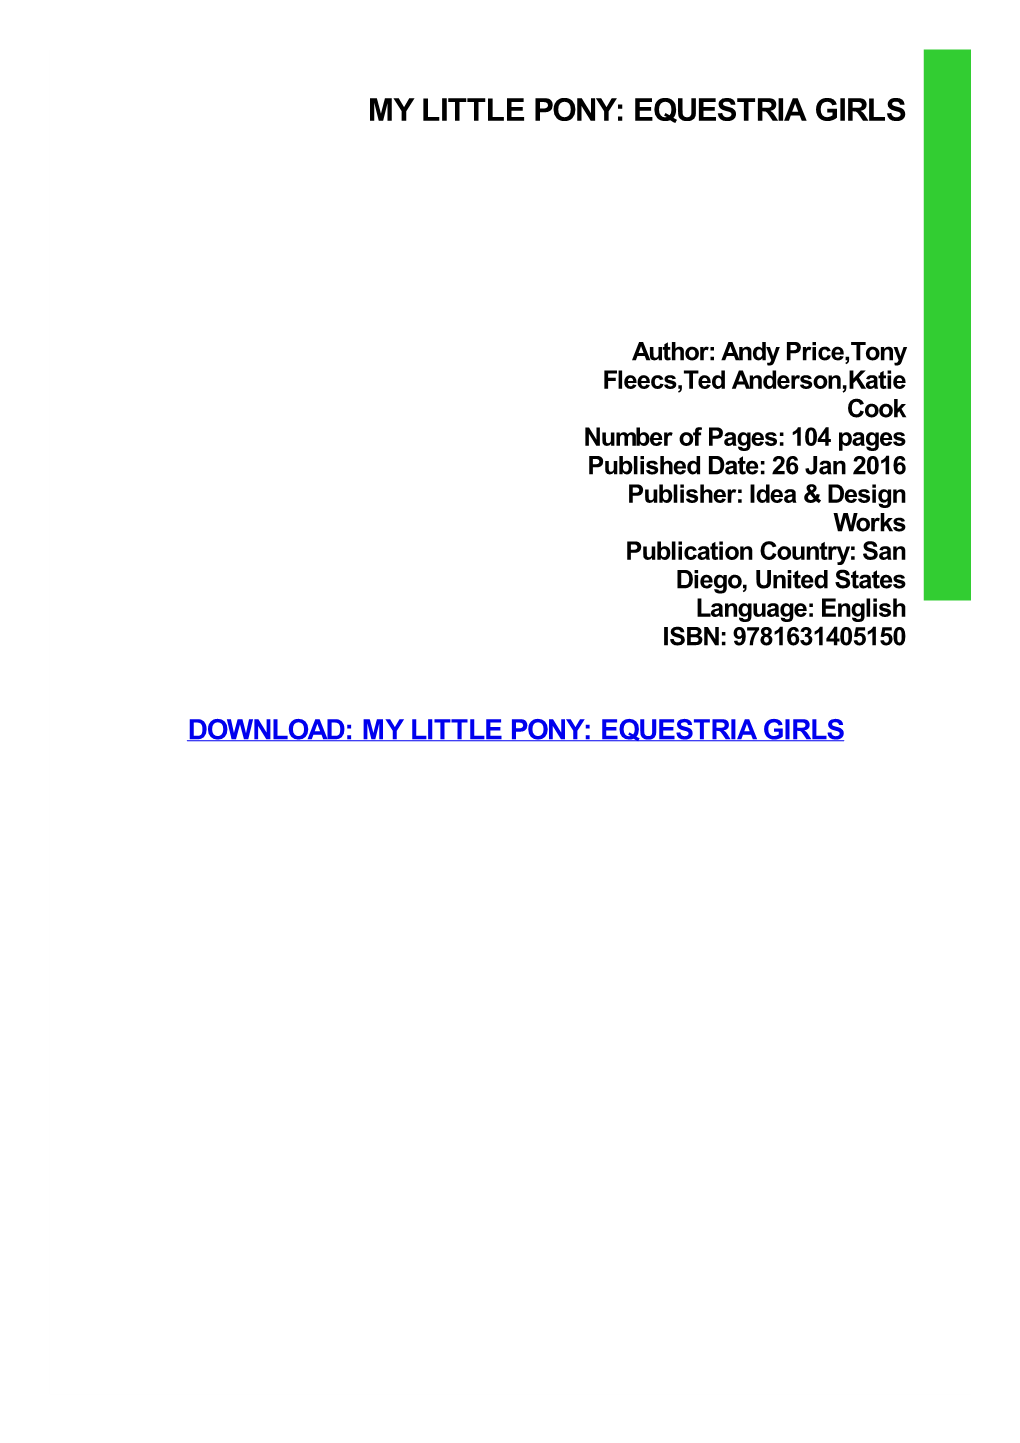 My Little Pony: Equestria Girls Pdf Free Download